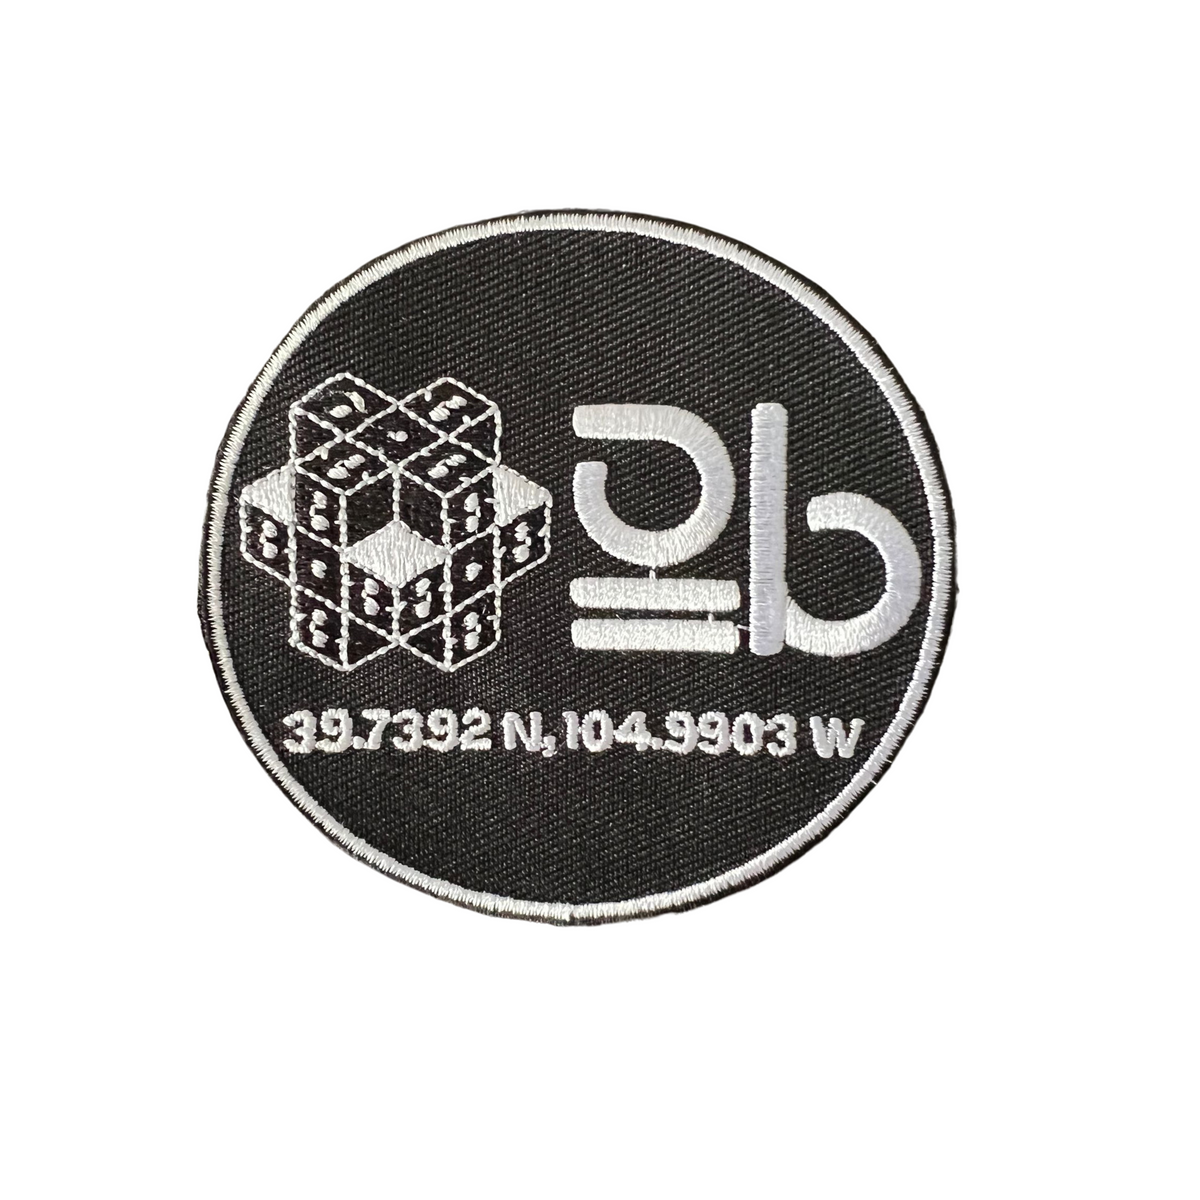 LIB x Elev808 Designs Black Baseball Jersey – Do LaB